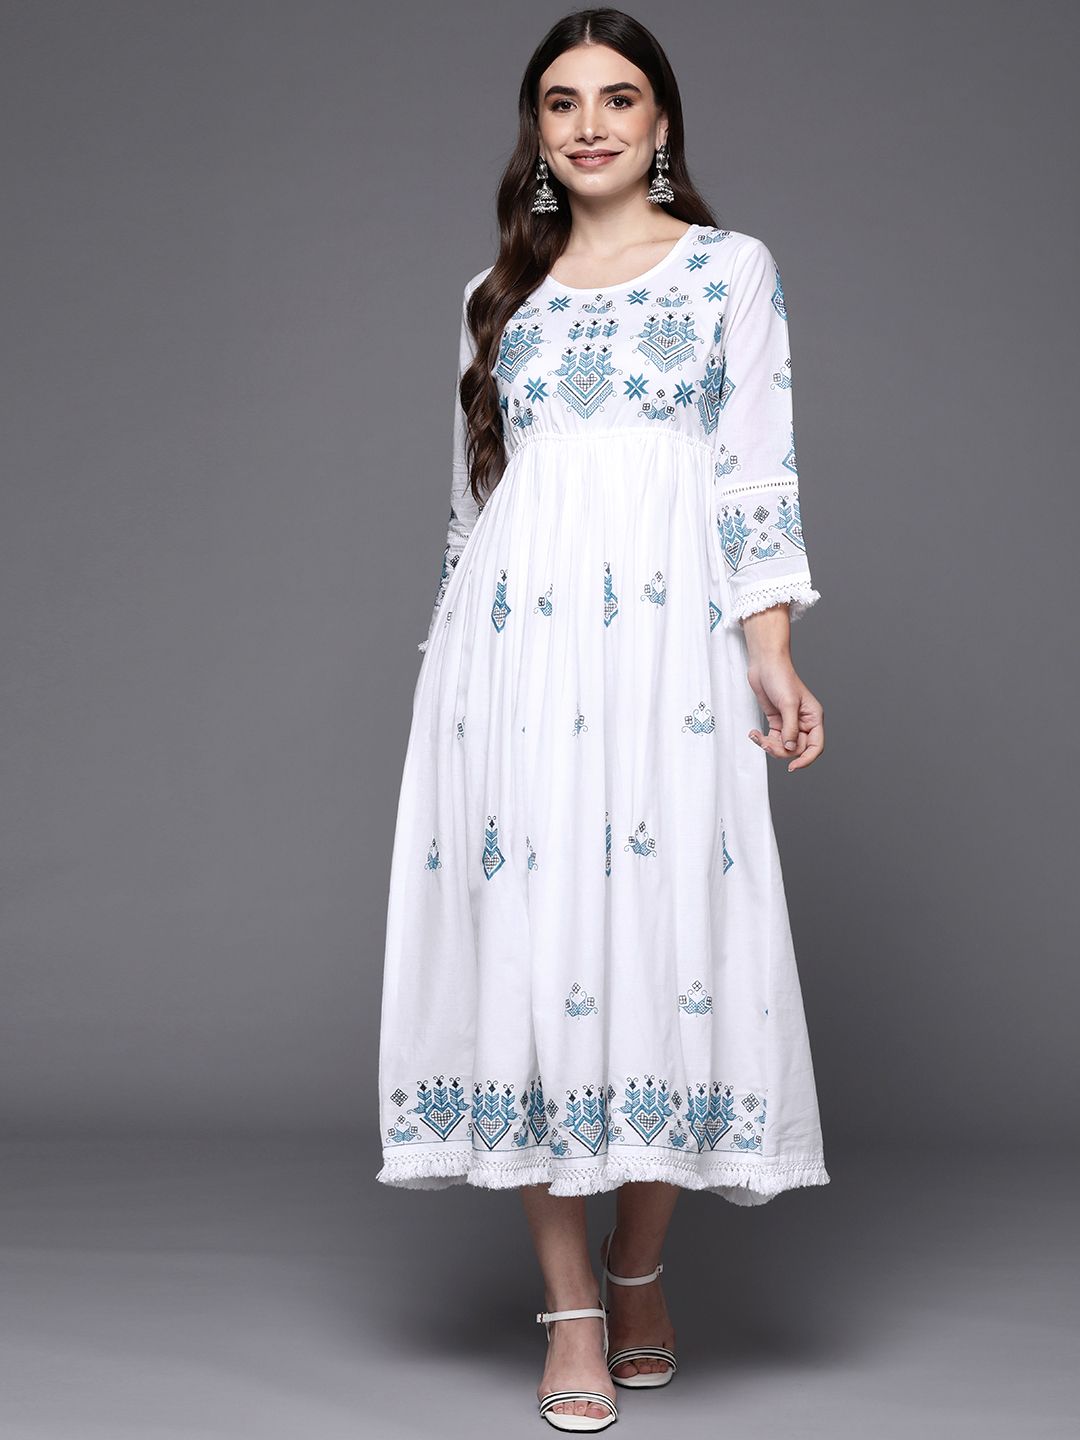 Indo Era White Ethnic Motifs Embroidered Ethnic A-Line Midi Dress Price in India